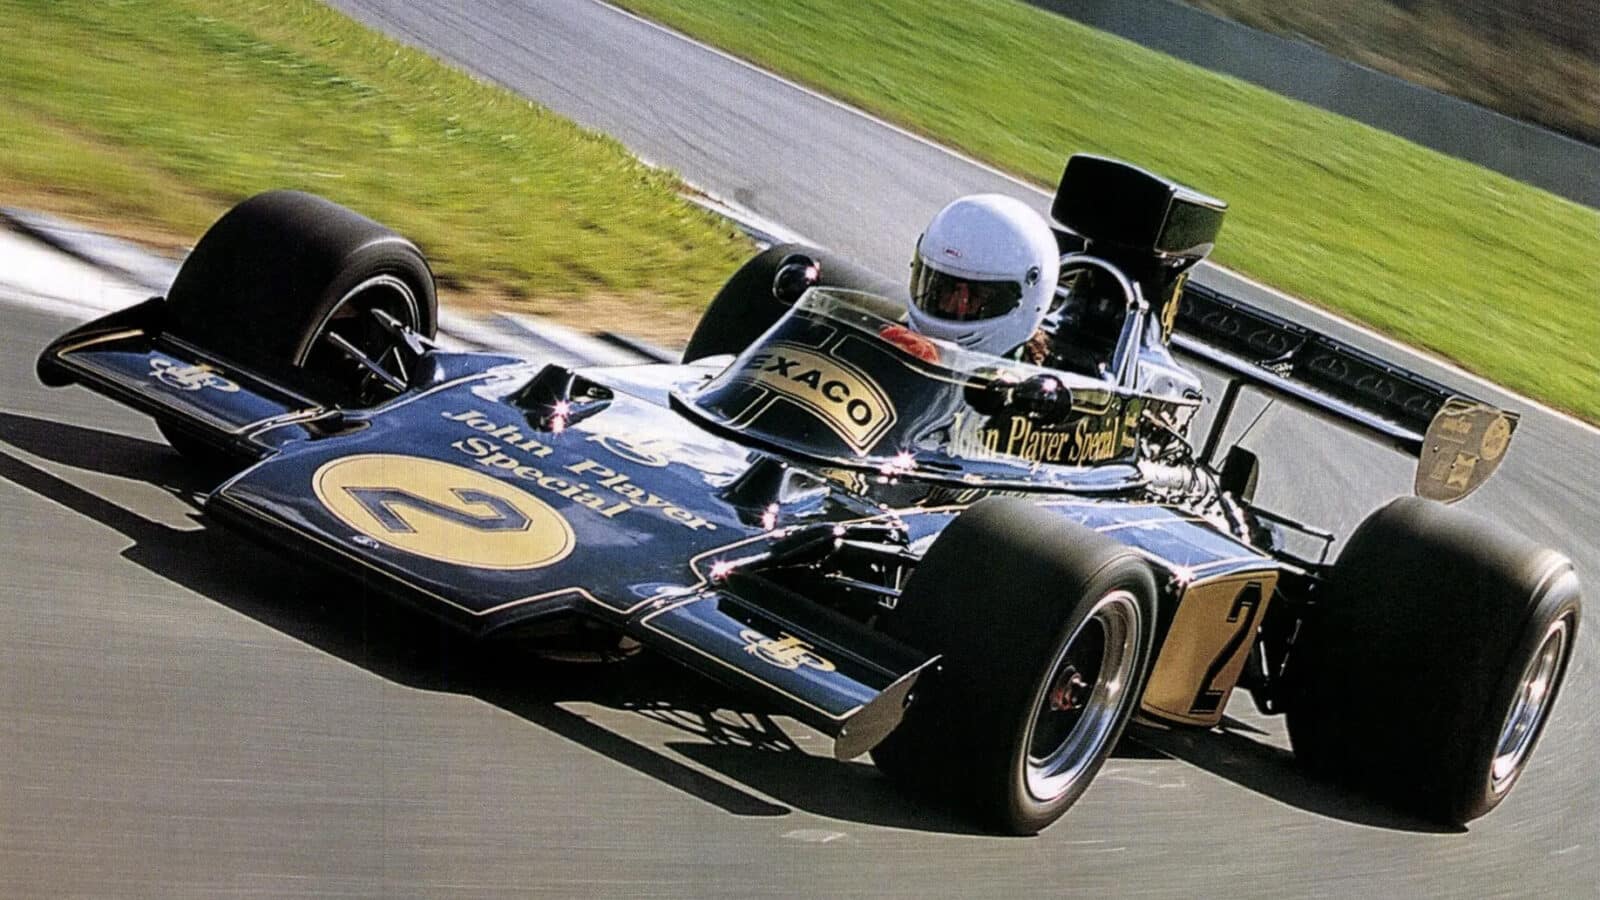 Ronnie Peterson Lotus 72 Formula 1 car